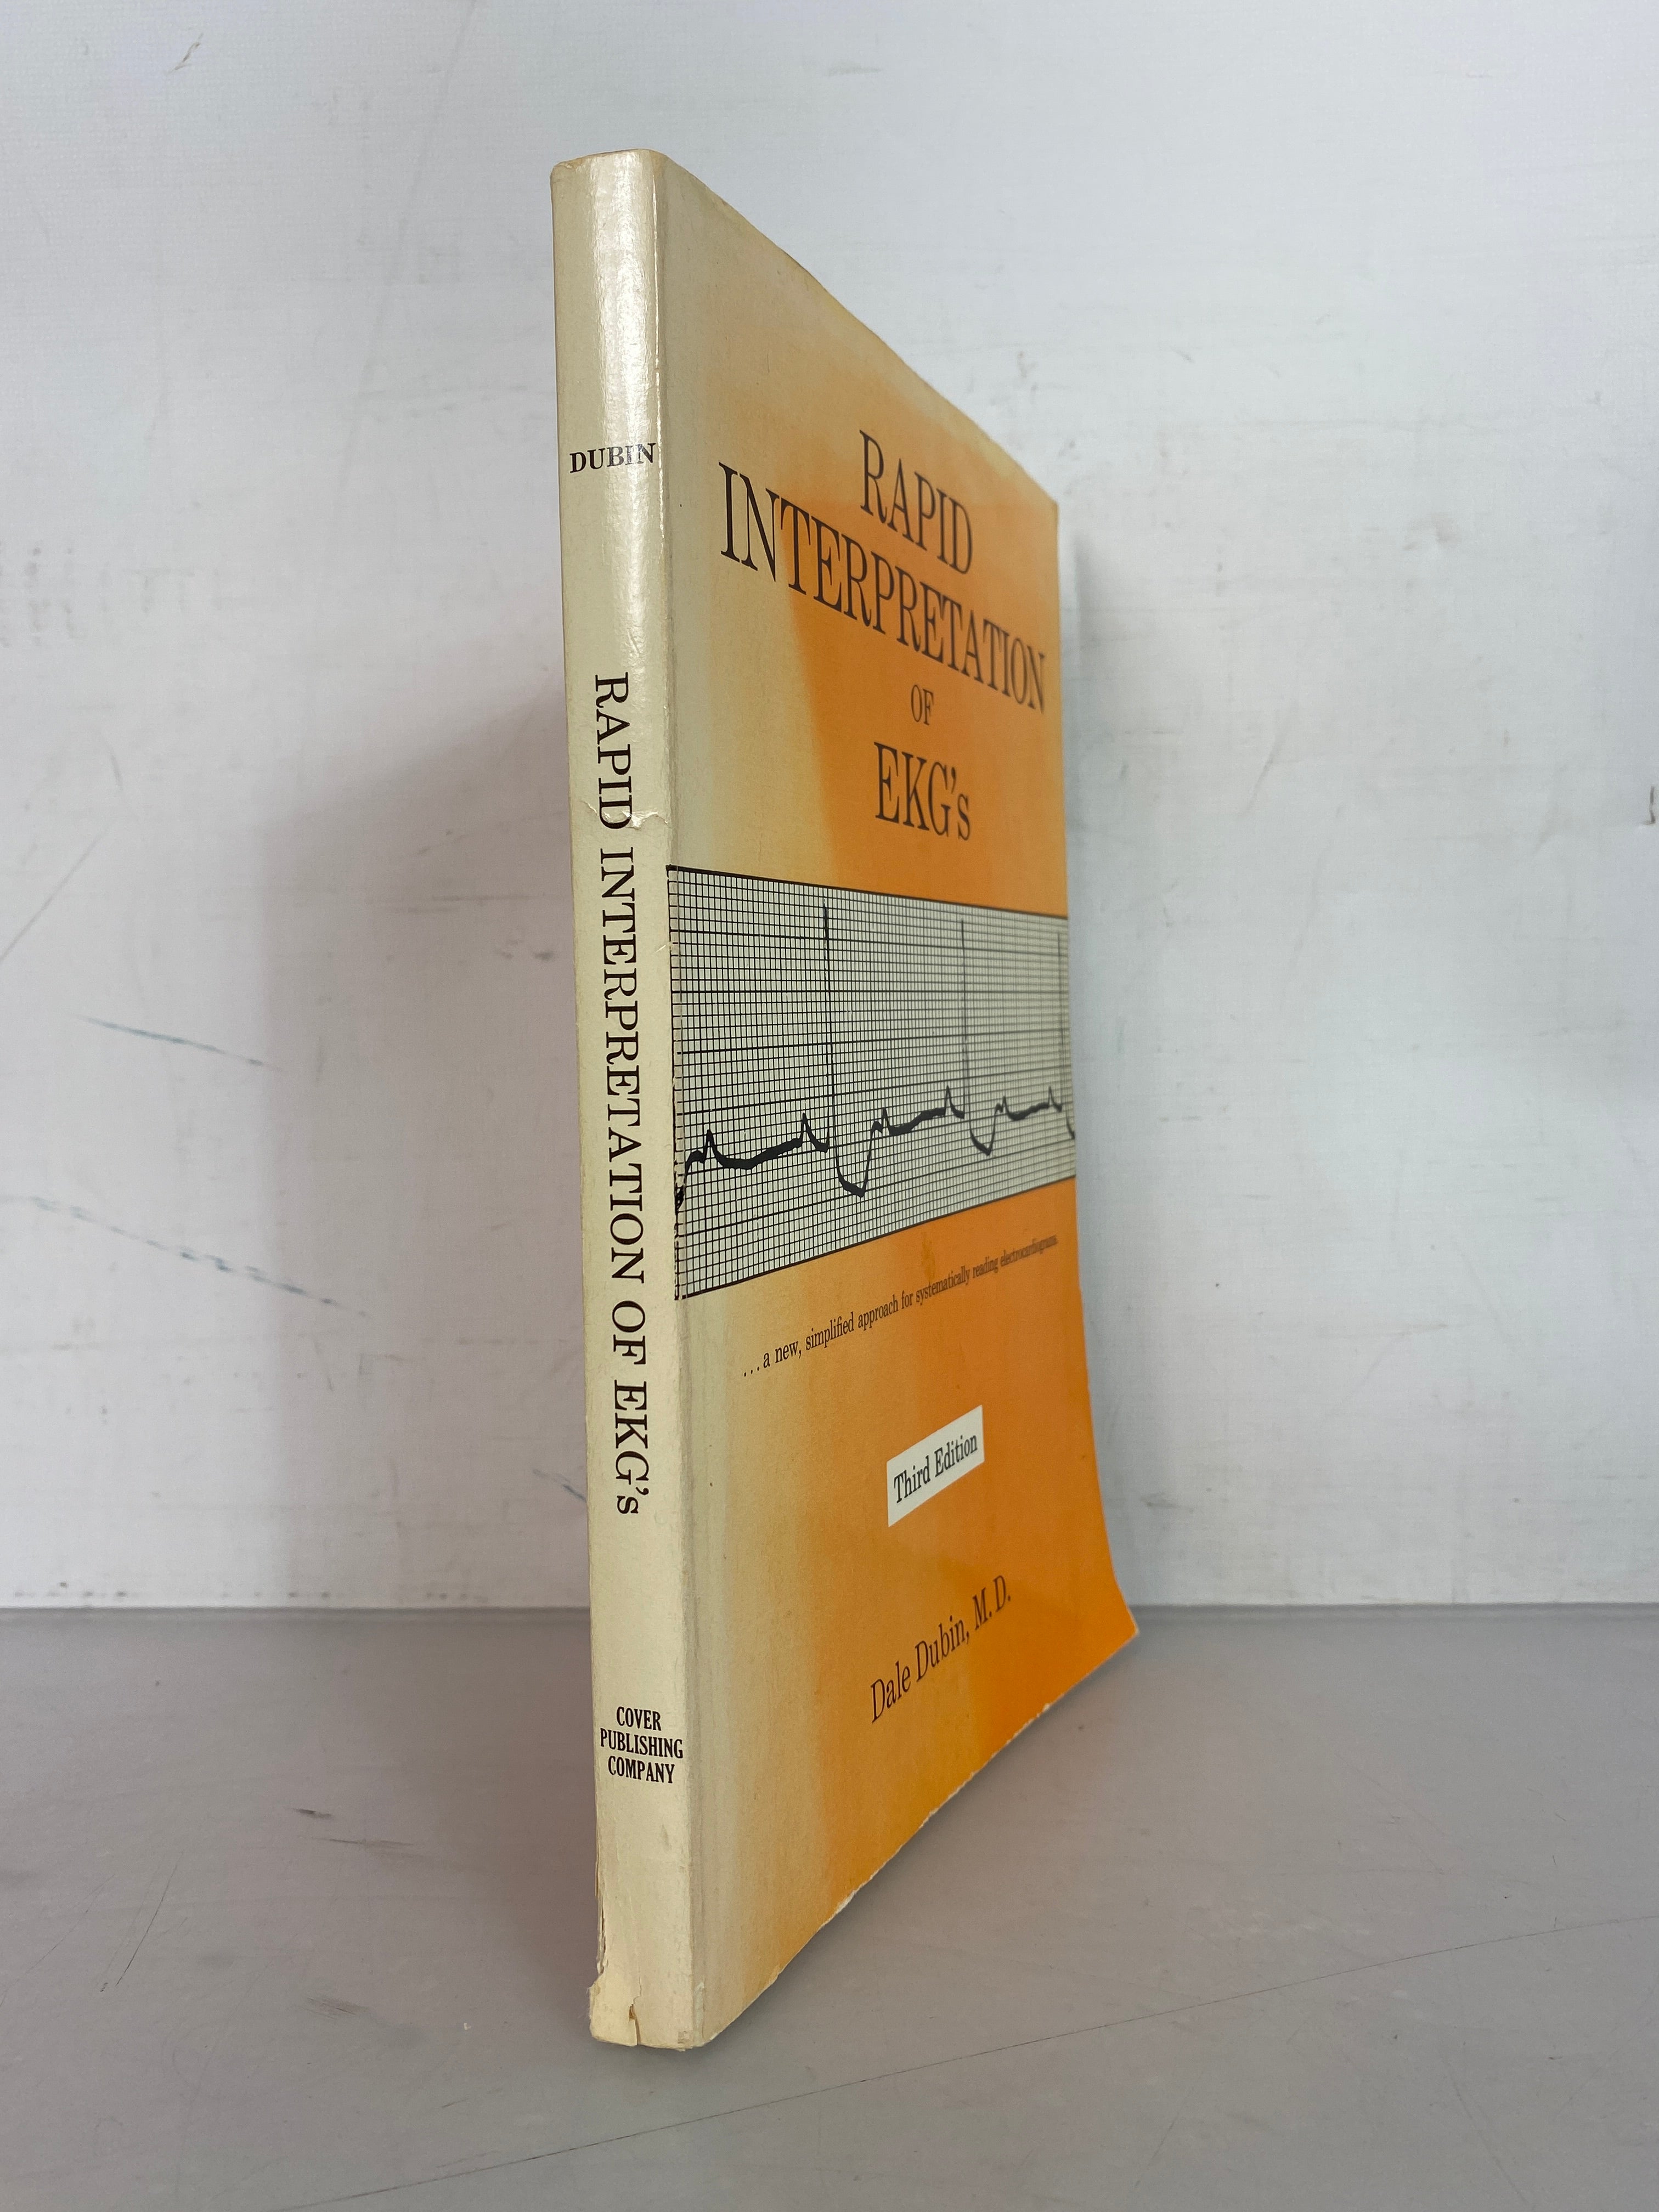 Rapid Interpretation of EKG's by Dale Dubin Third Edition 1986 SC